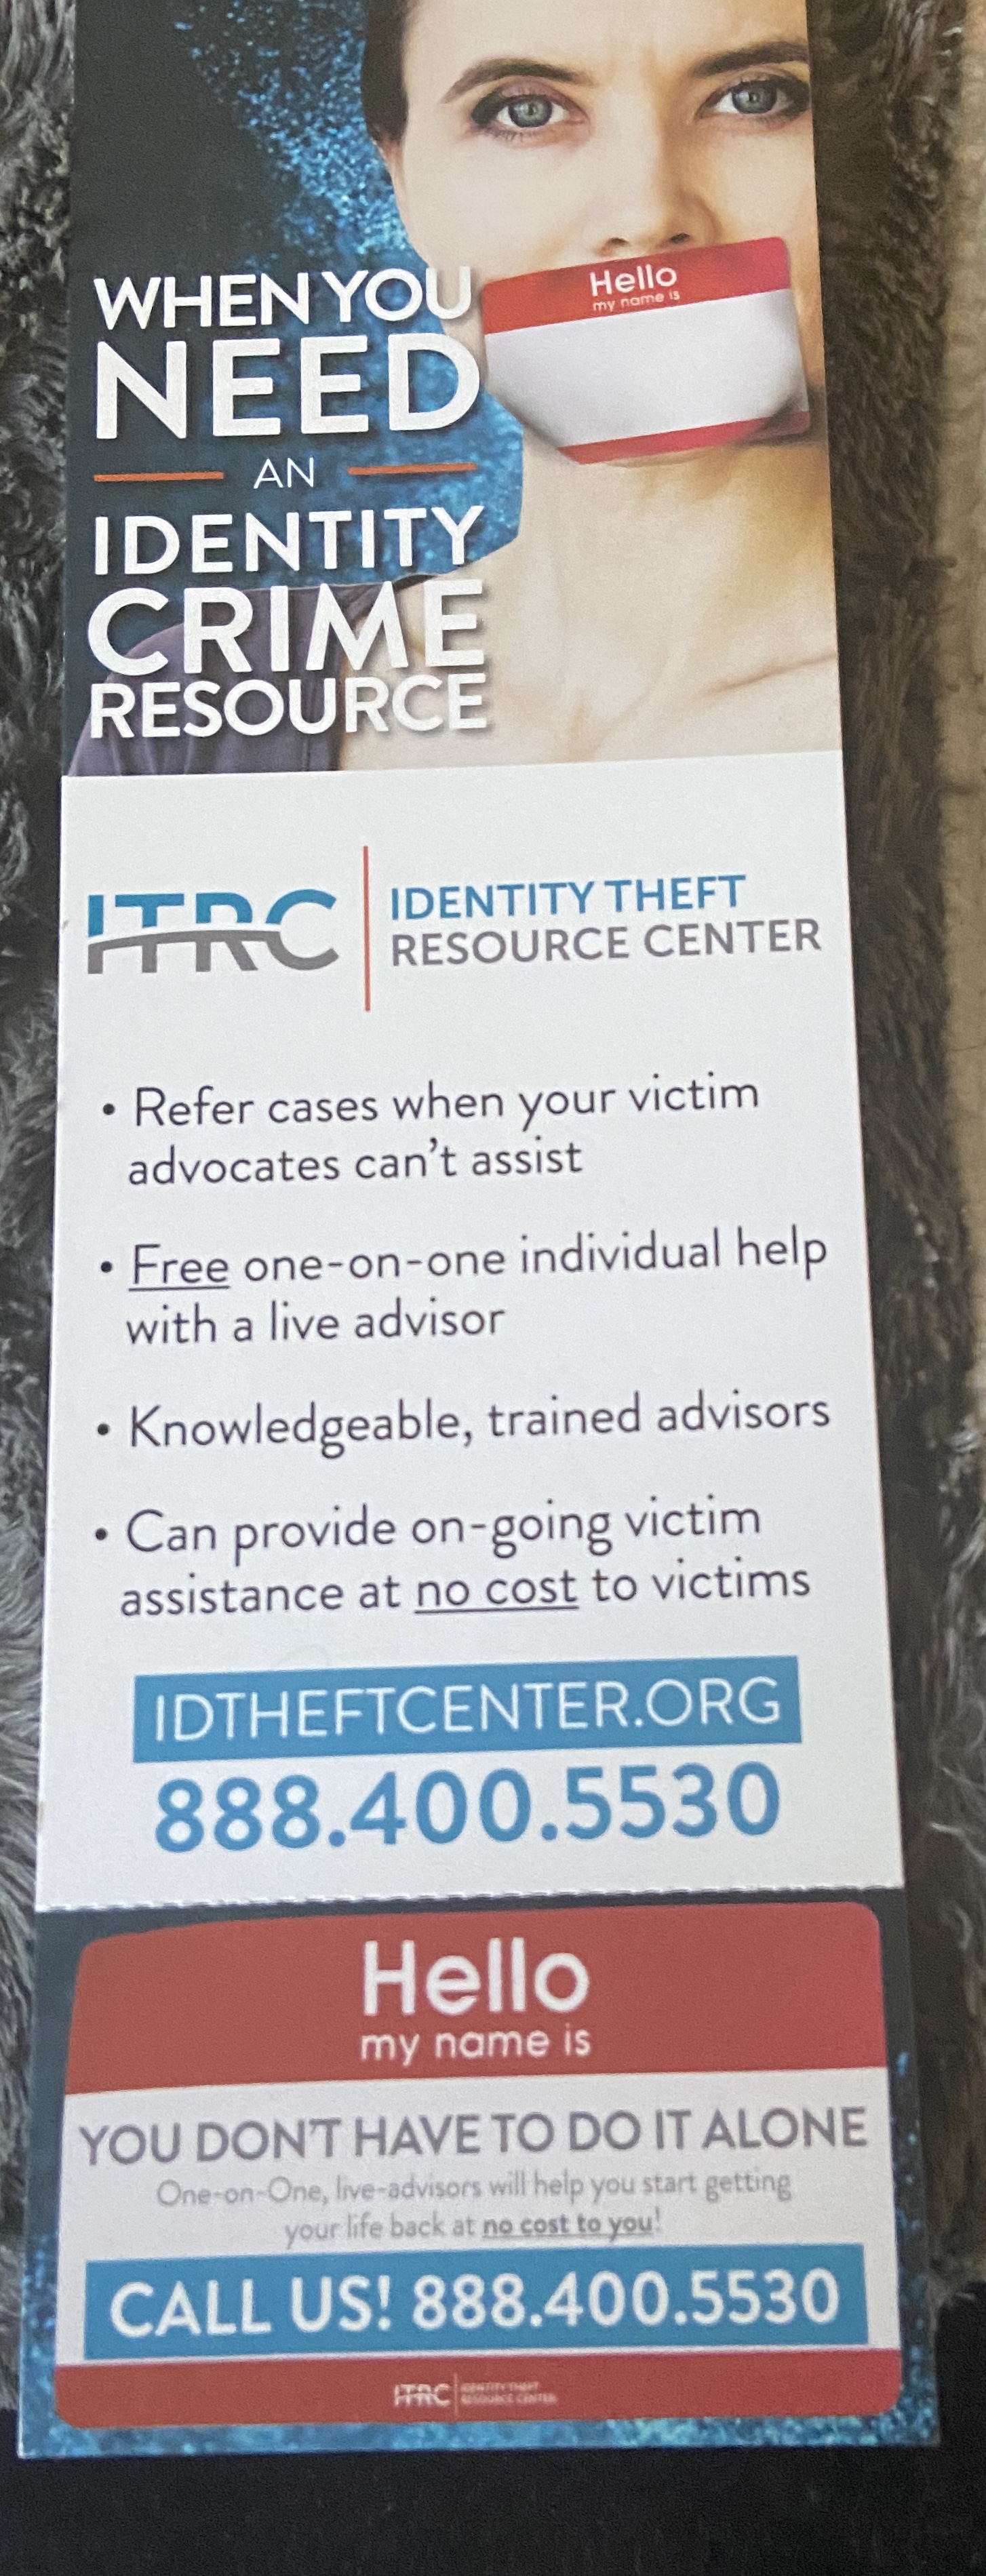 Identity theft resource center 